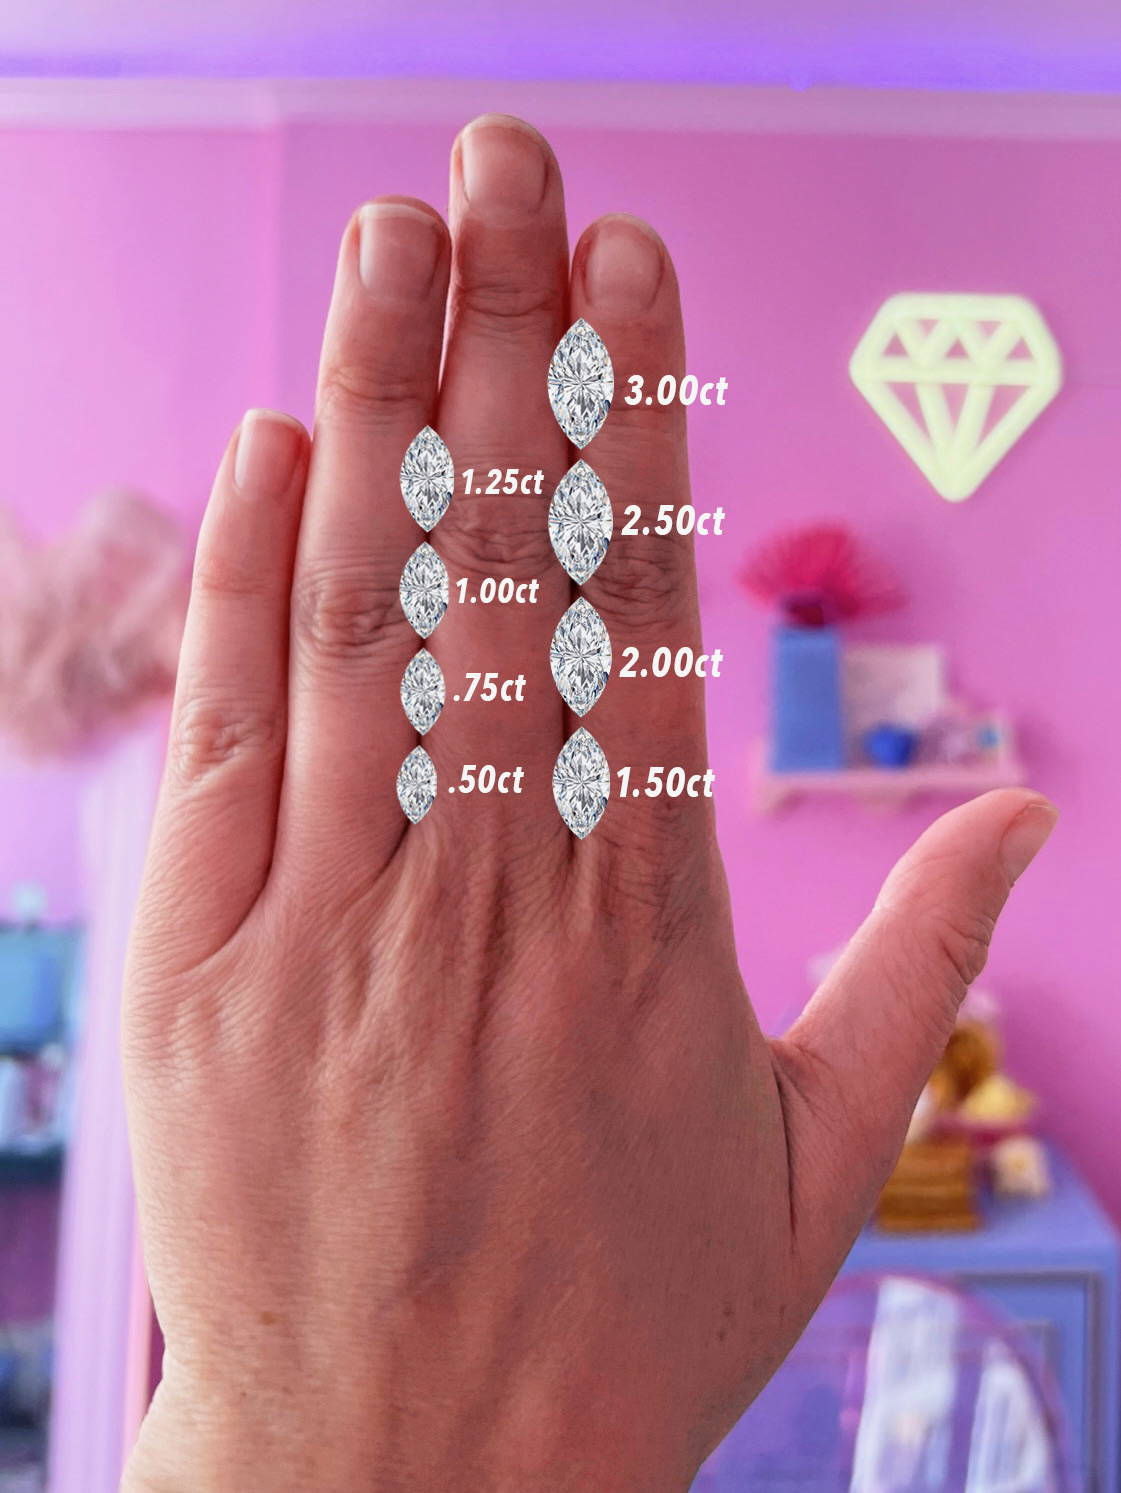 marquise cut diamond carat sizes on a hand